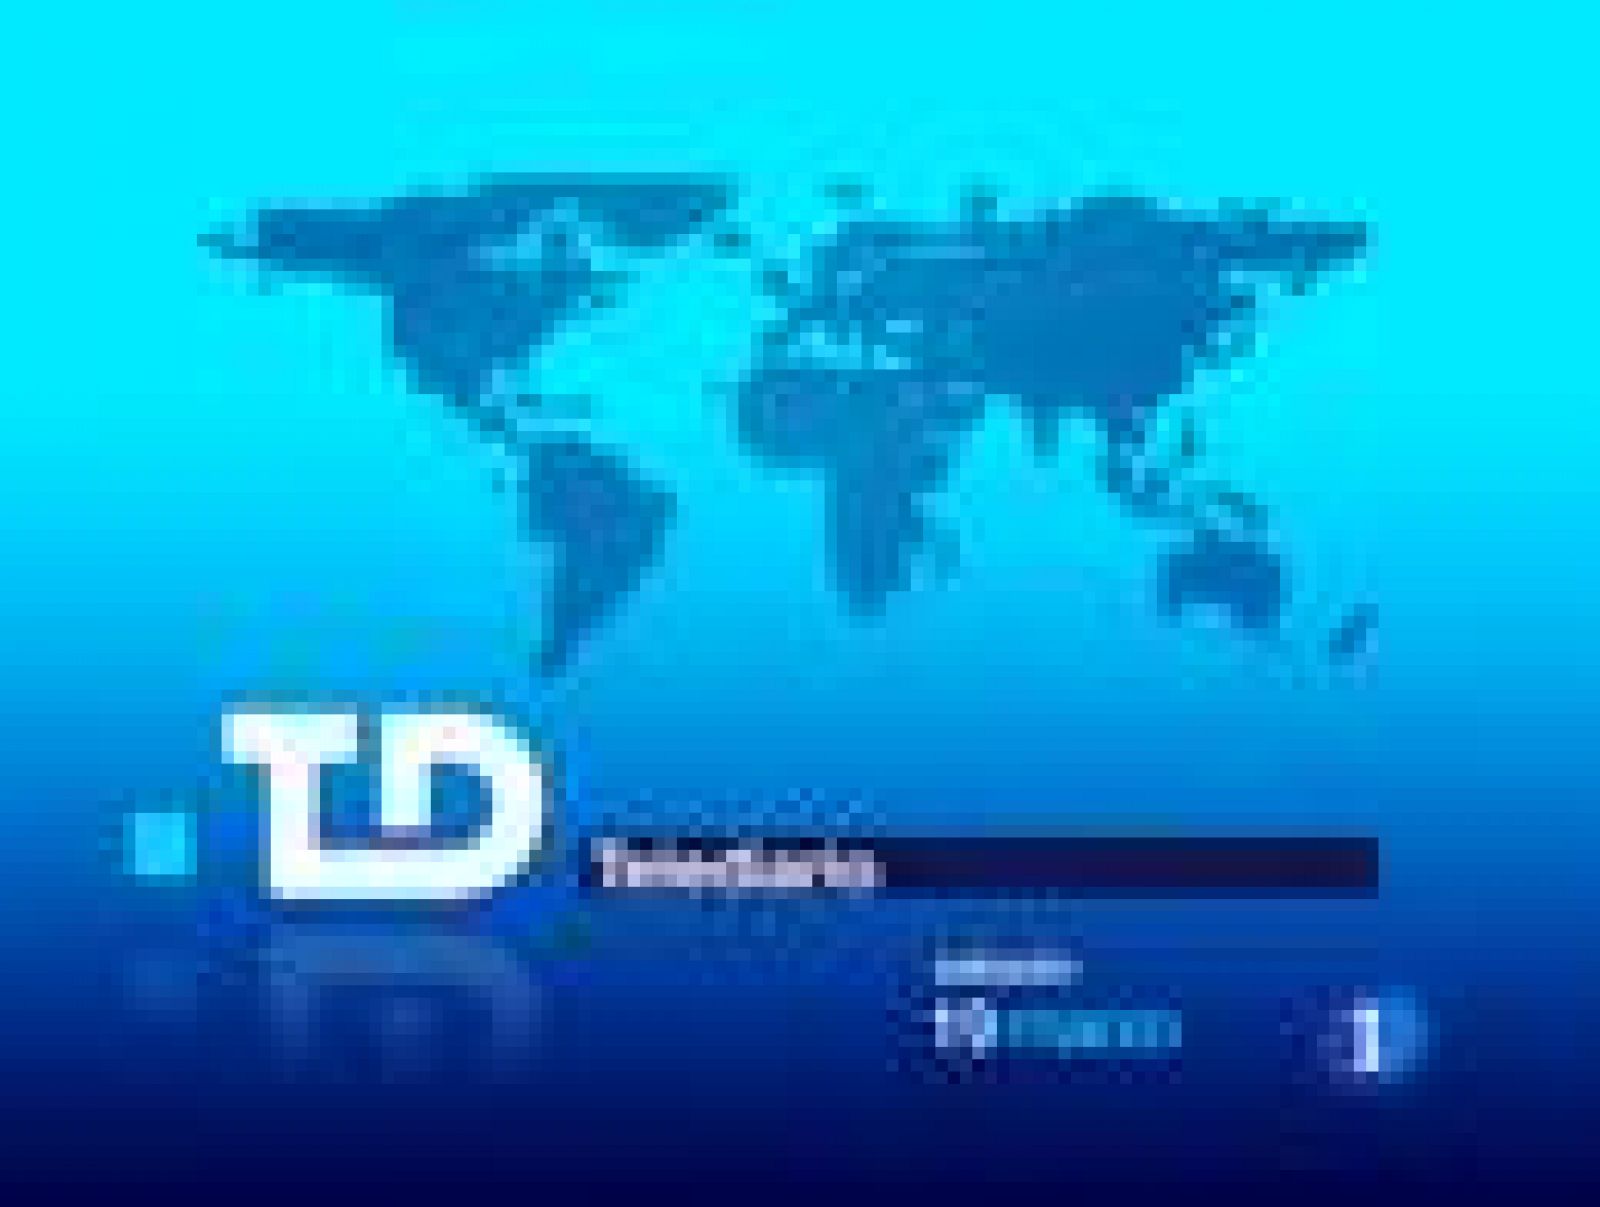 Telediario 1: Telediario 2 en 4' - 19/03/11 | RTVE Play